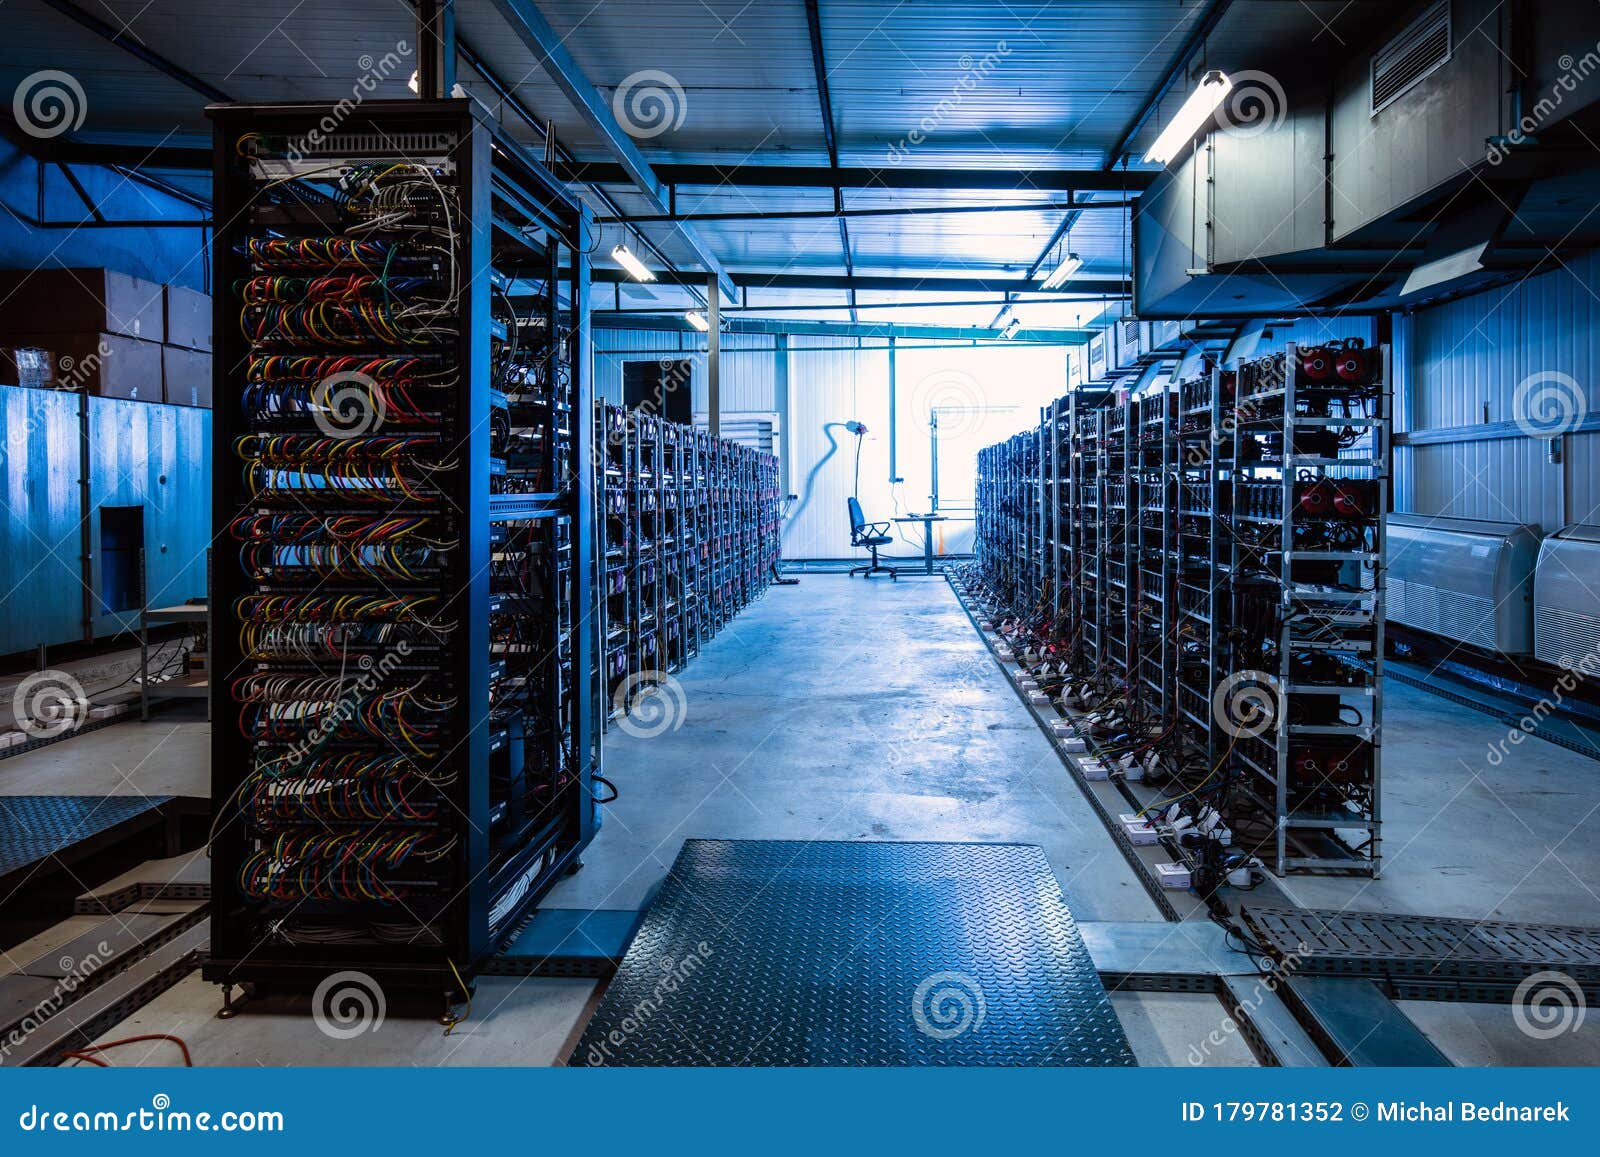 crypto mining server room